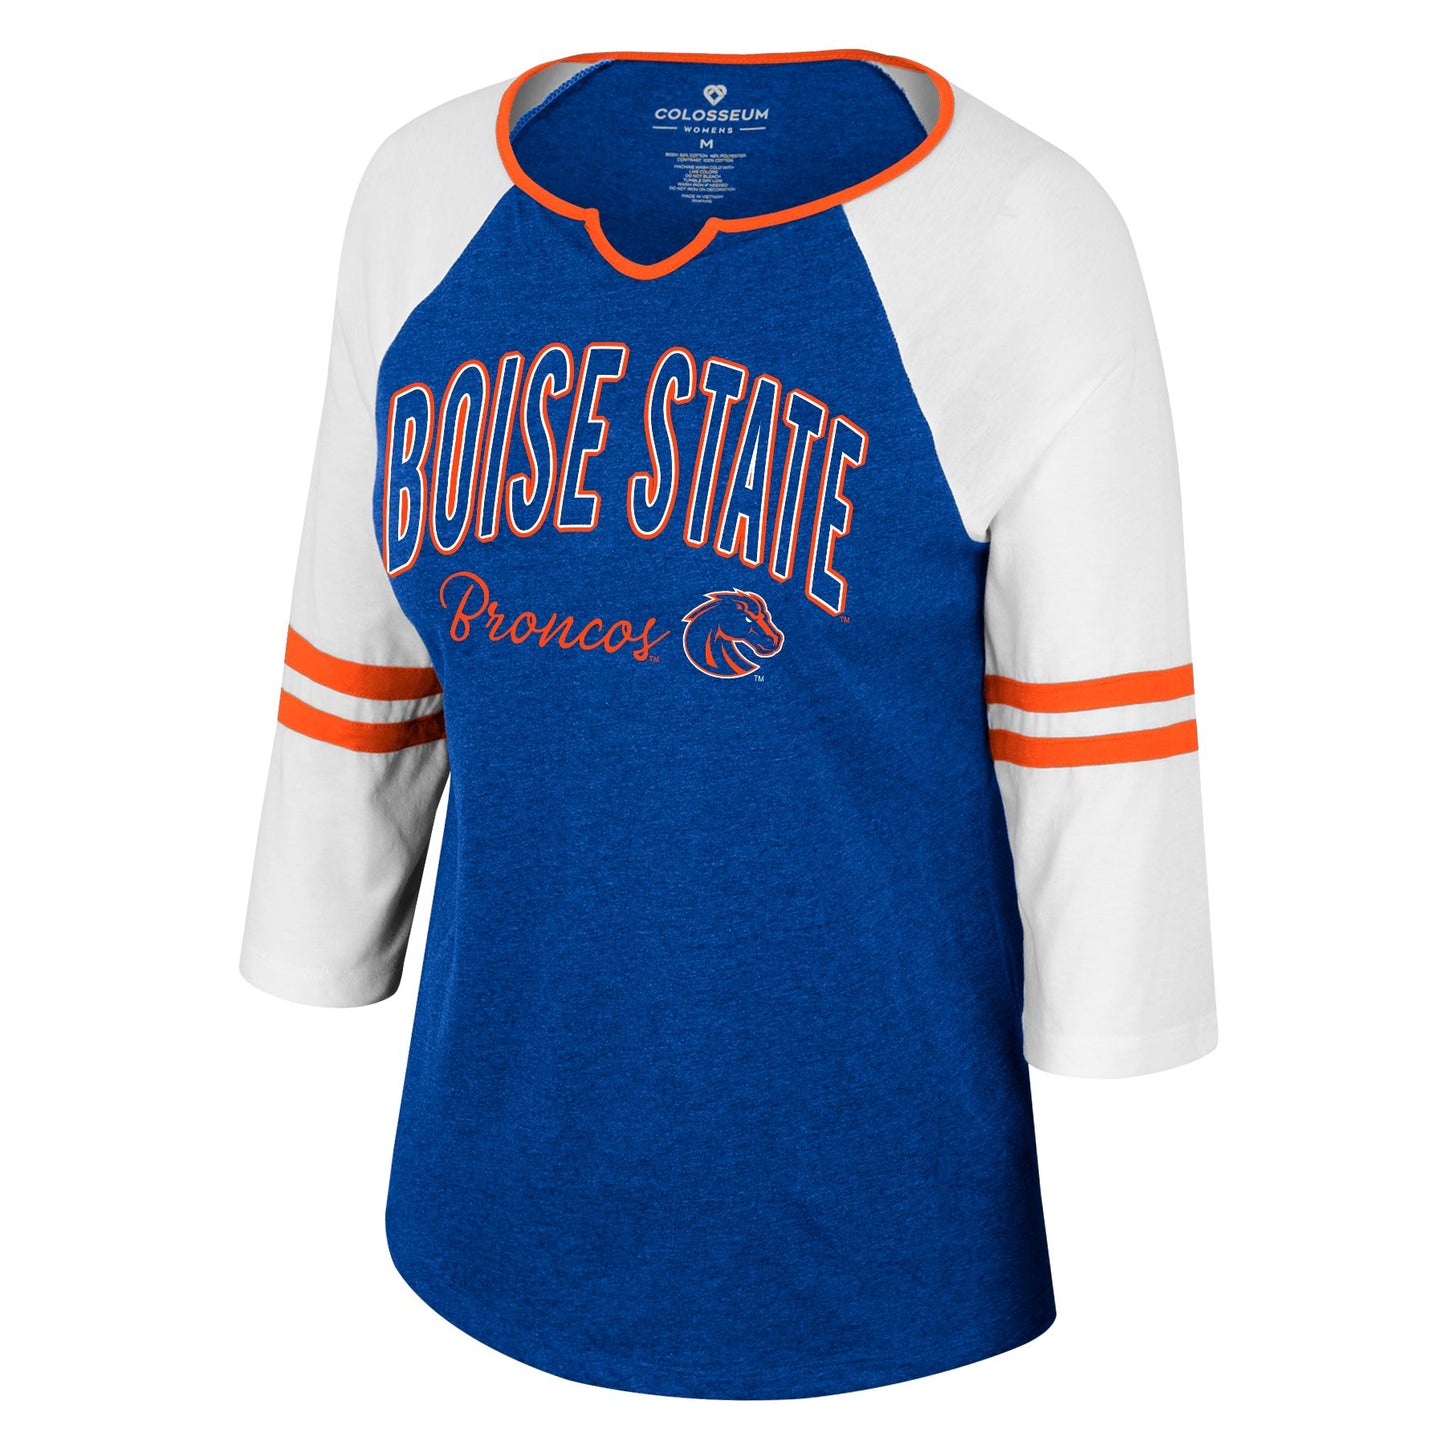 Boise State Broncos Colosseum Women's 3/4 Sleeve Long Sleeve T-Shirt (Blue/White)